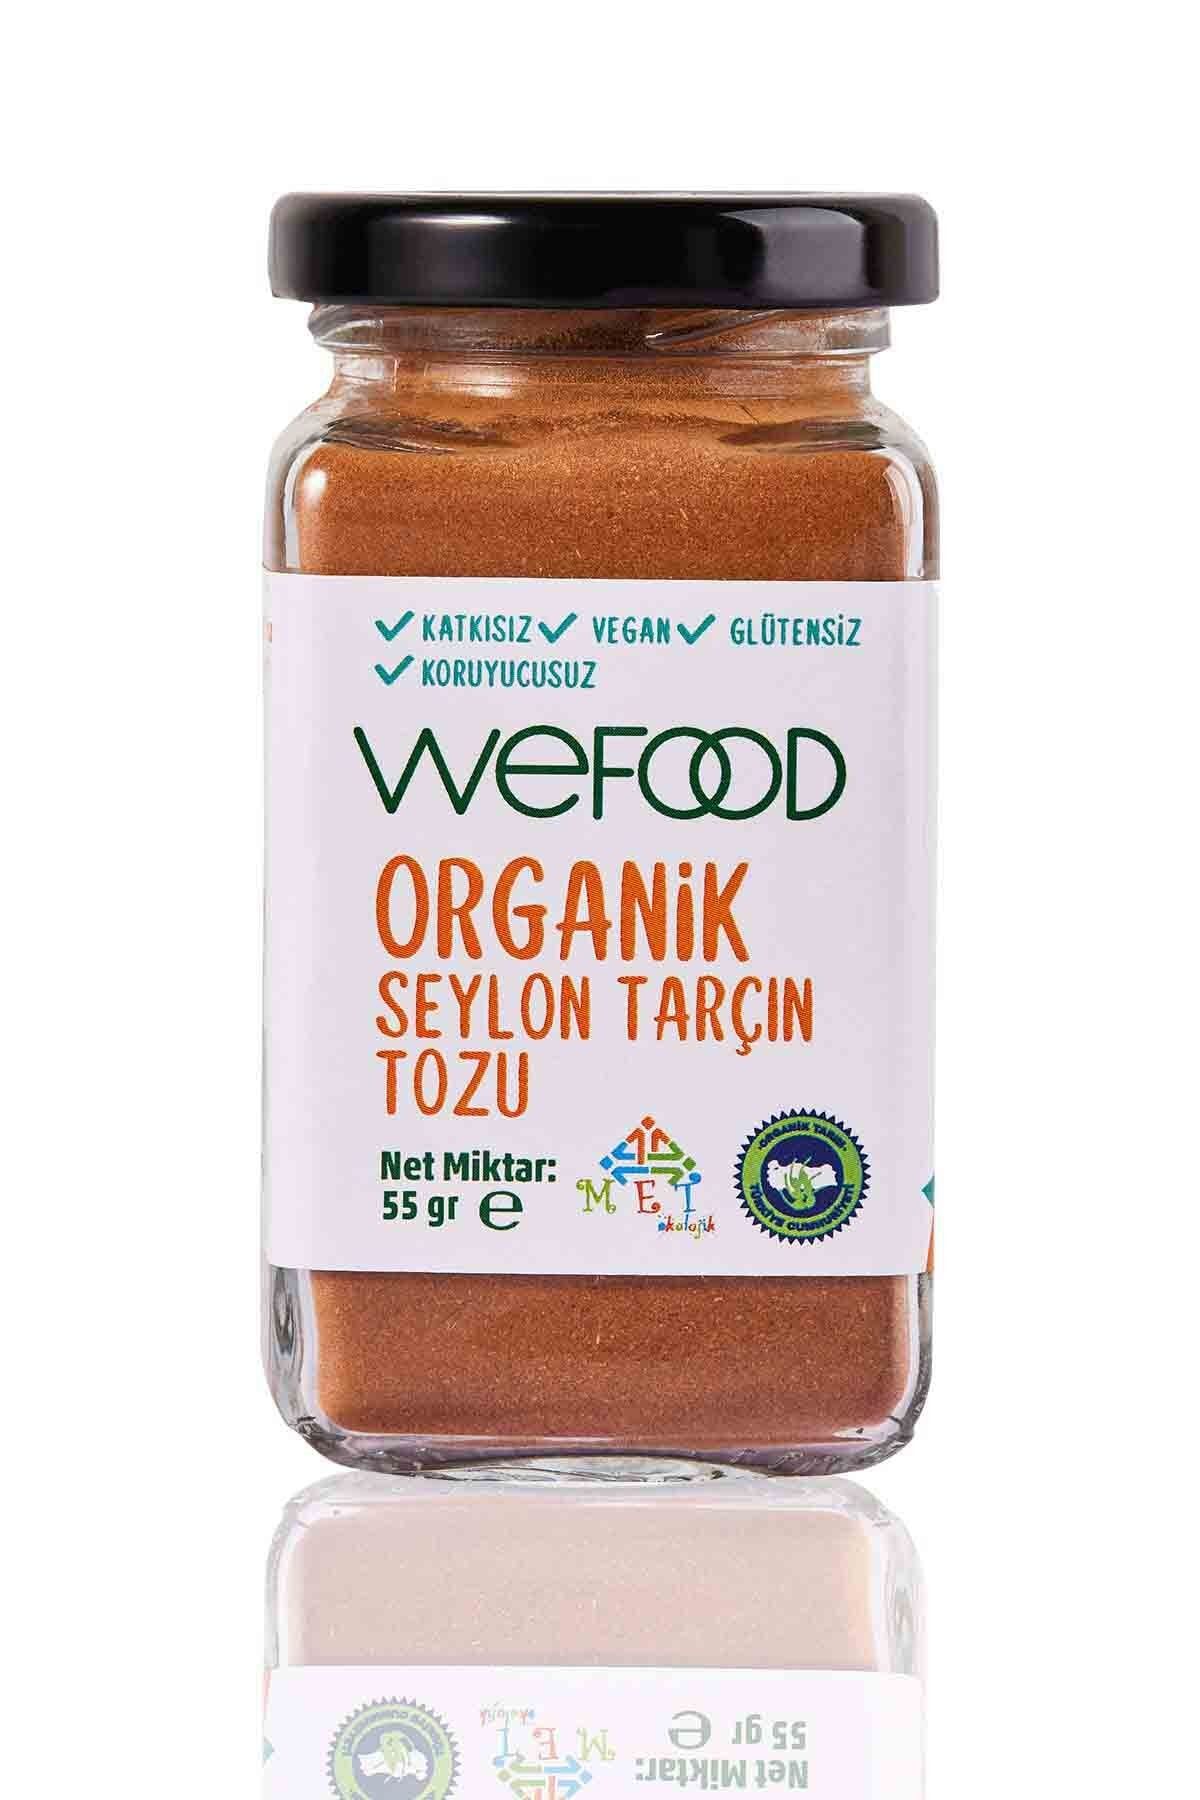 Wefood Organik Seylon Tarçın Tozu 55 gr